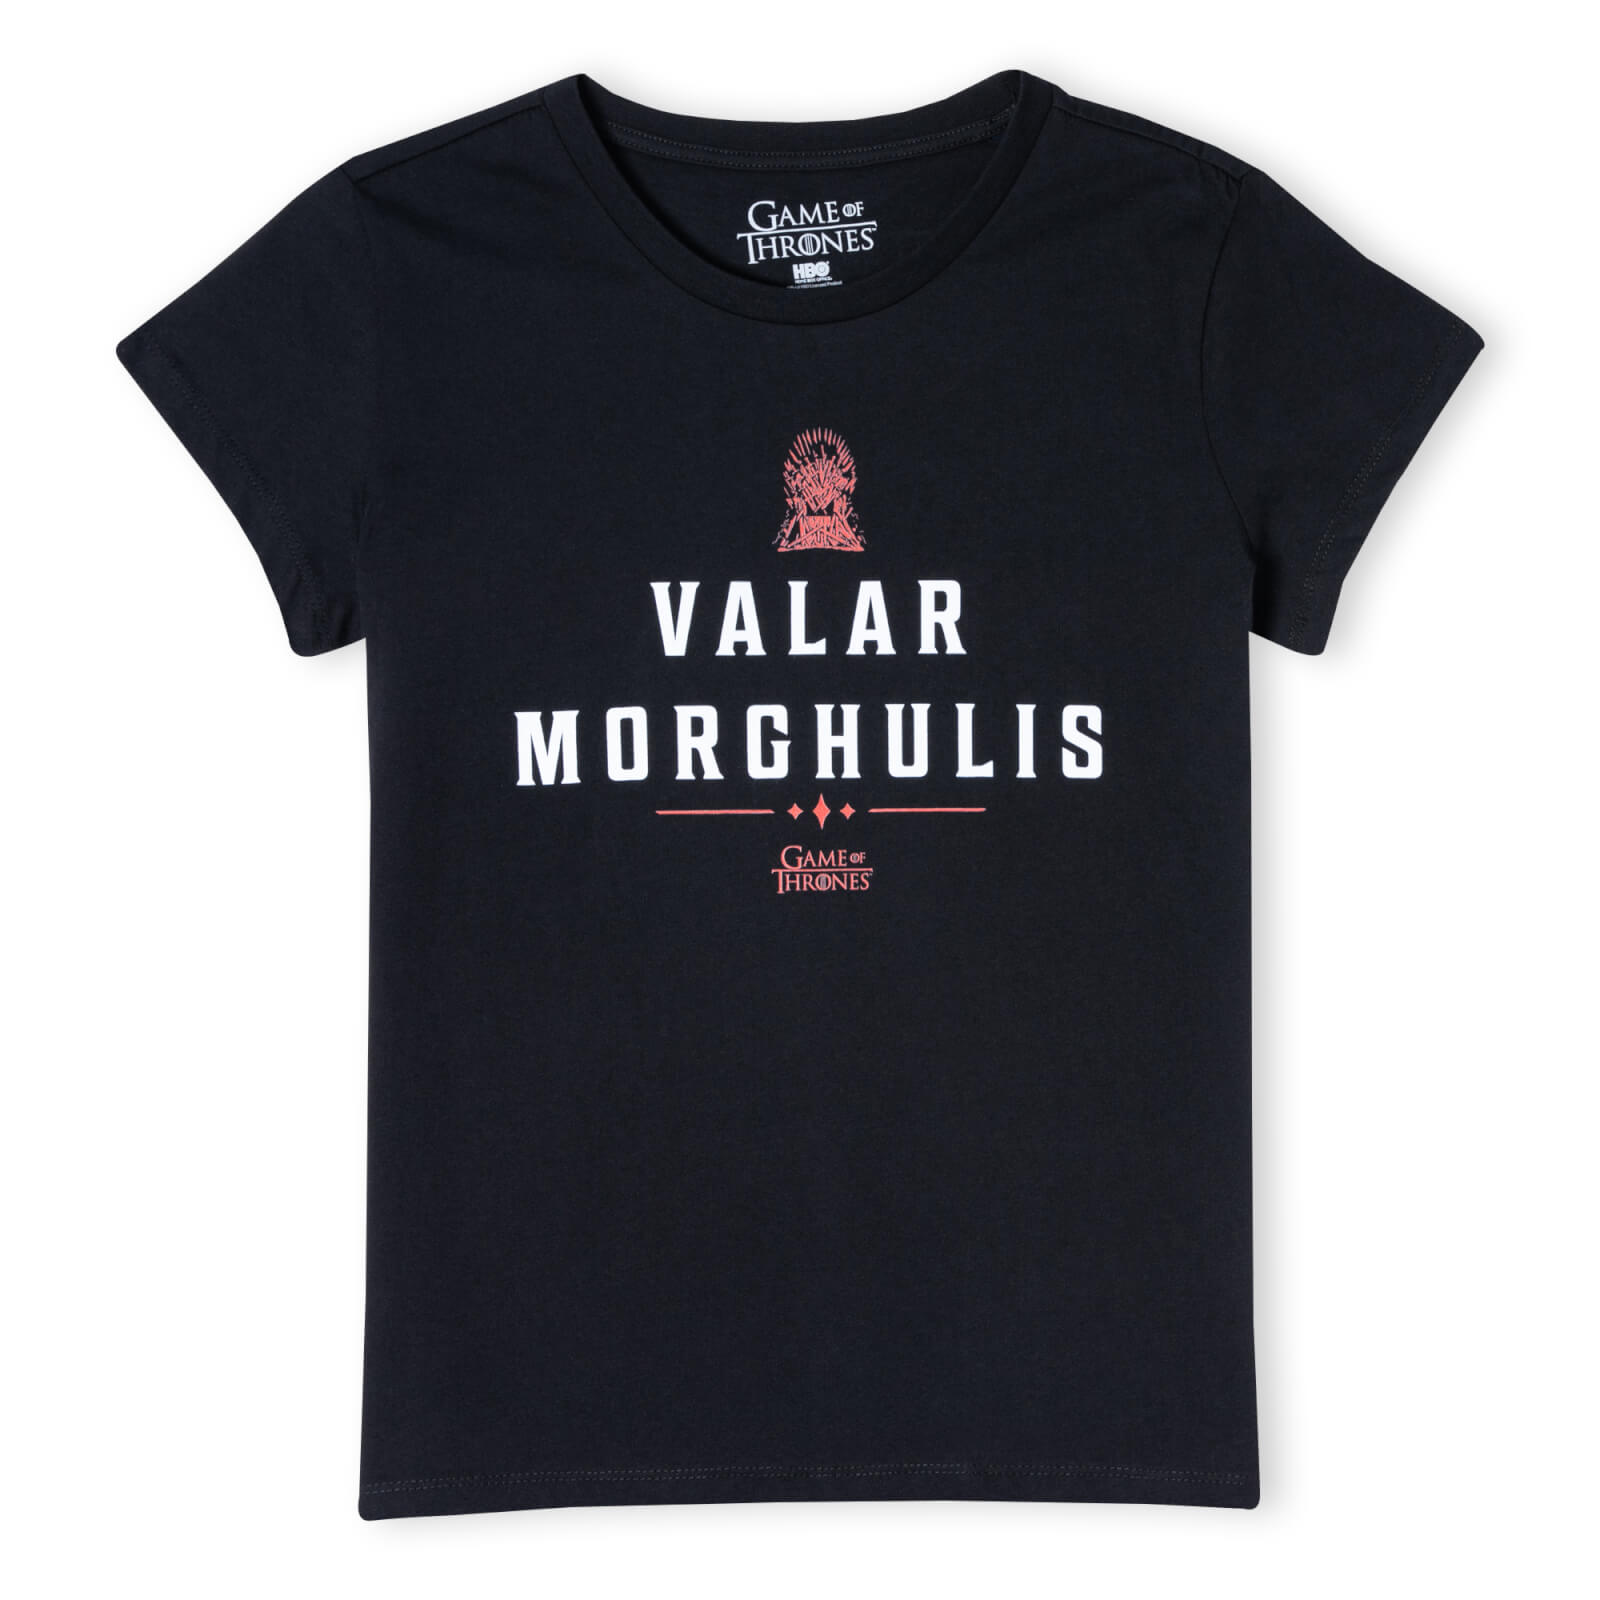 Game of Thrones Valar Morghulis Women's T-Shirt - Black - XXL - Black product